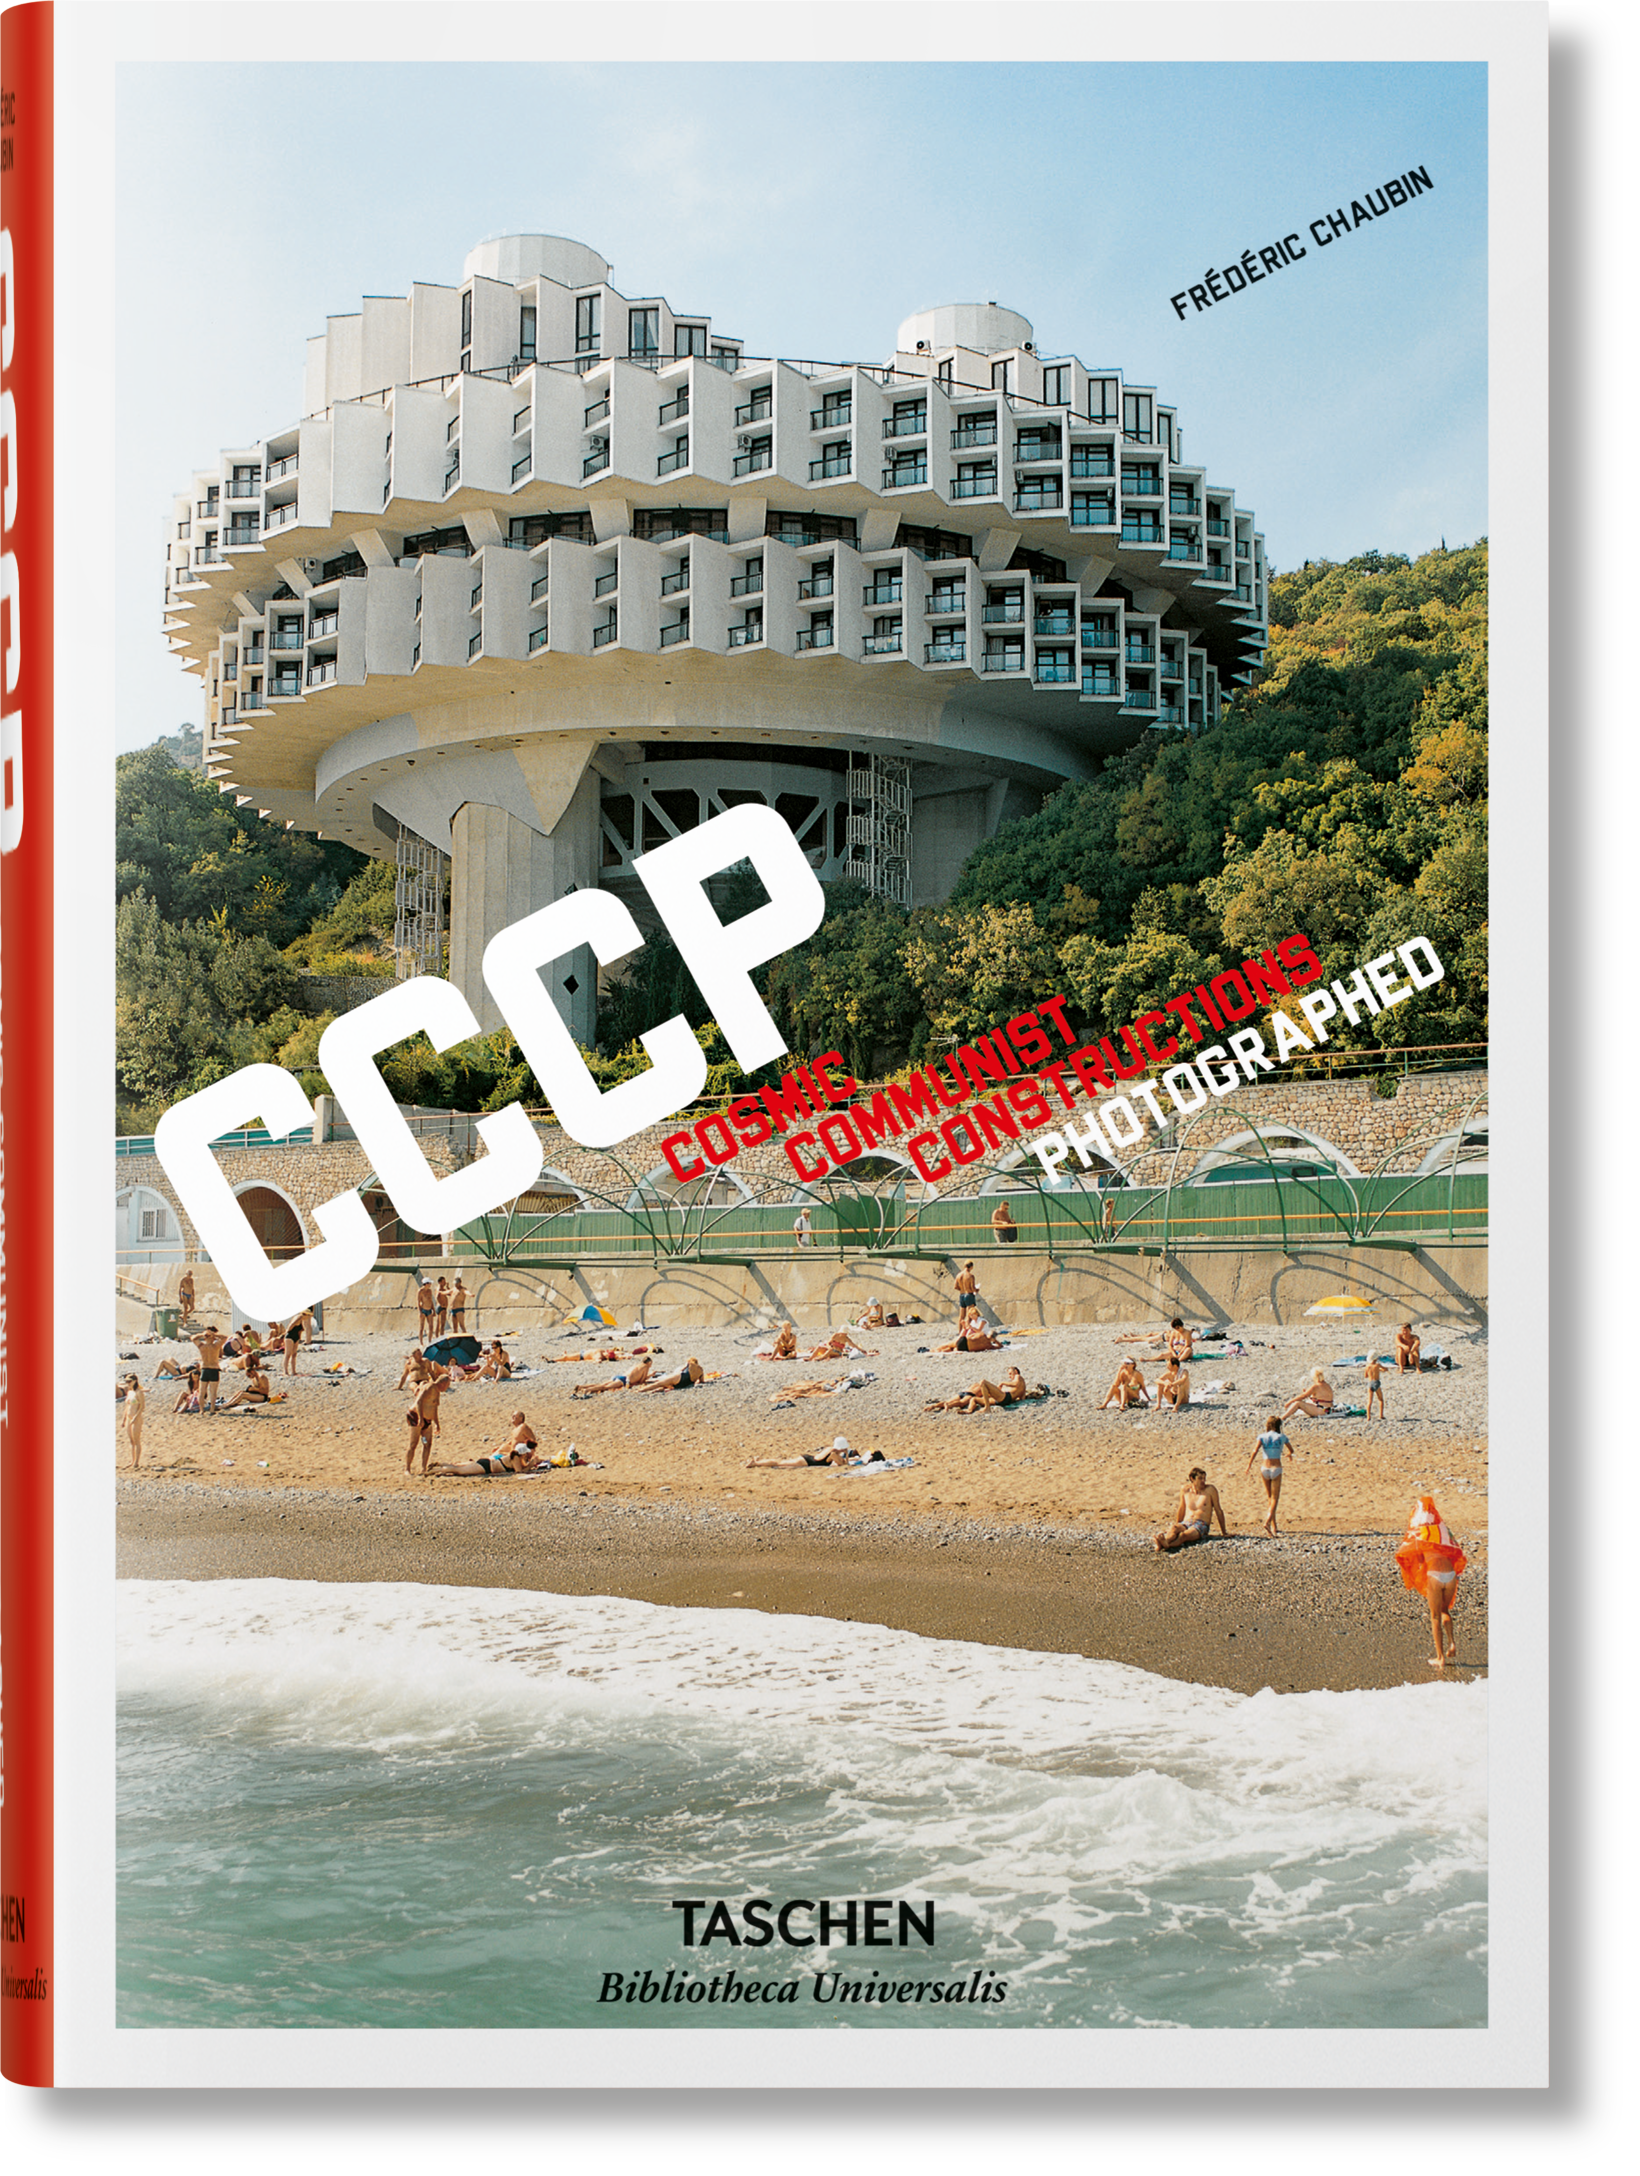 Taschen Frederic Chaubin Cosmic Communist Constructions Photographed Book